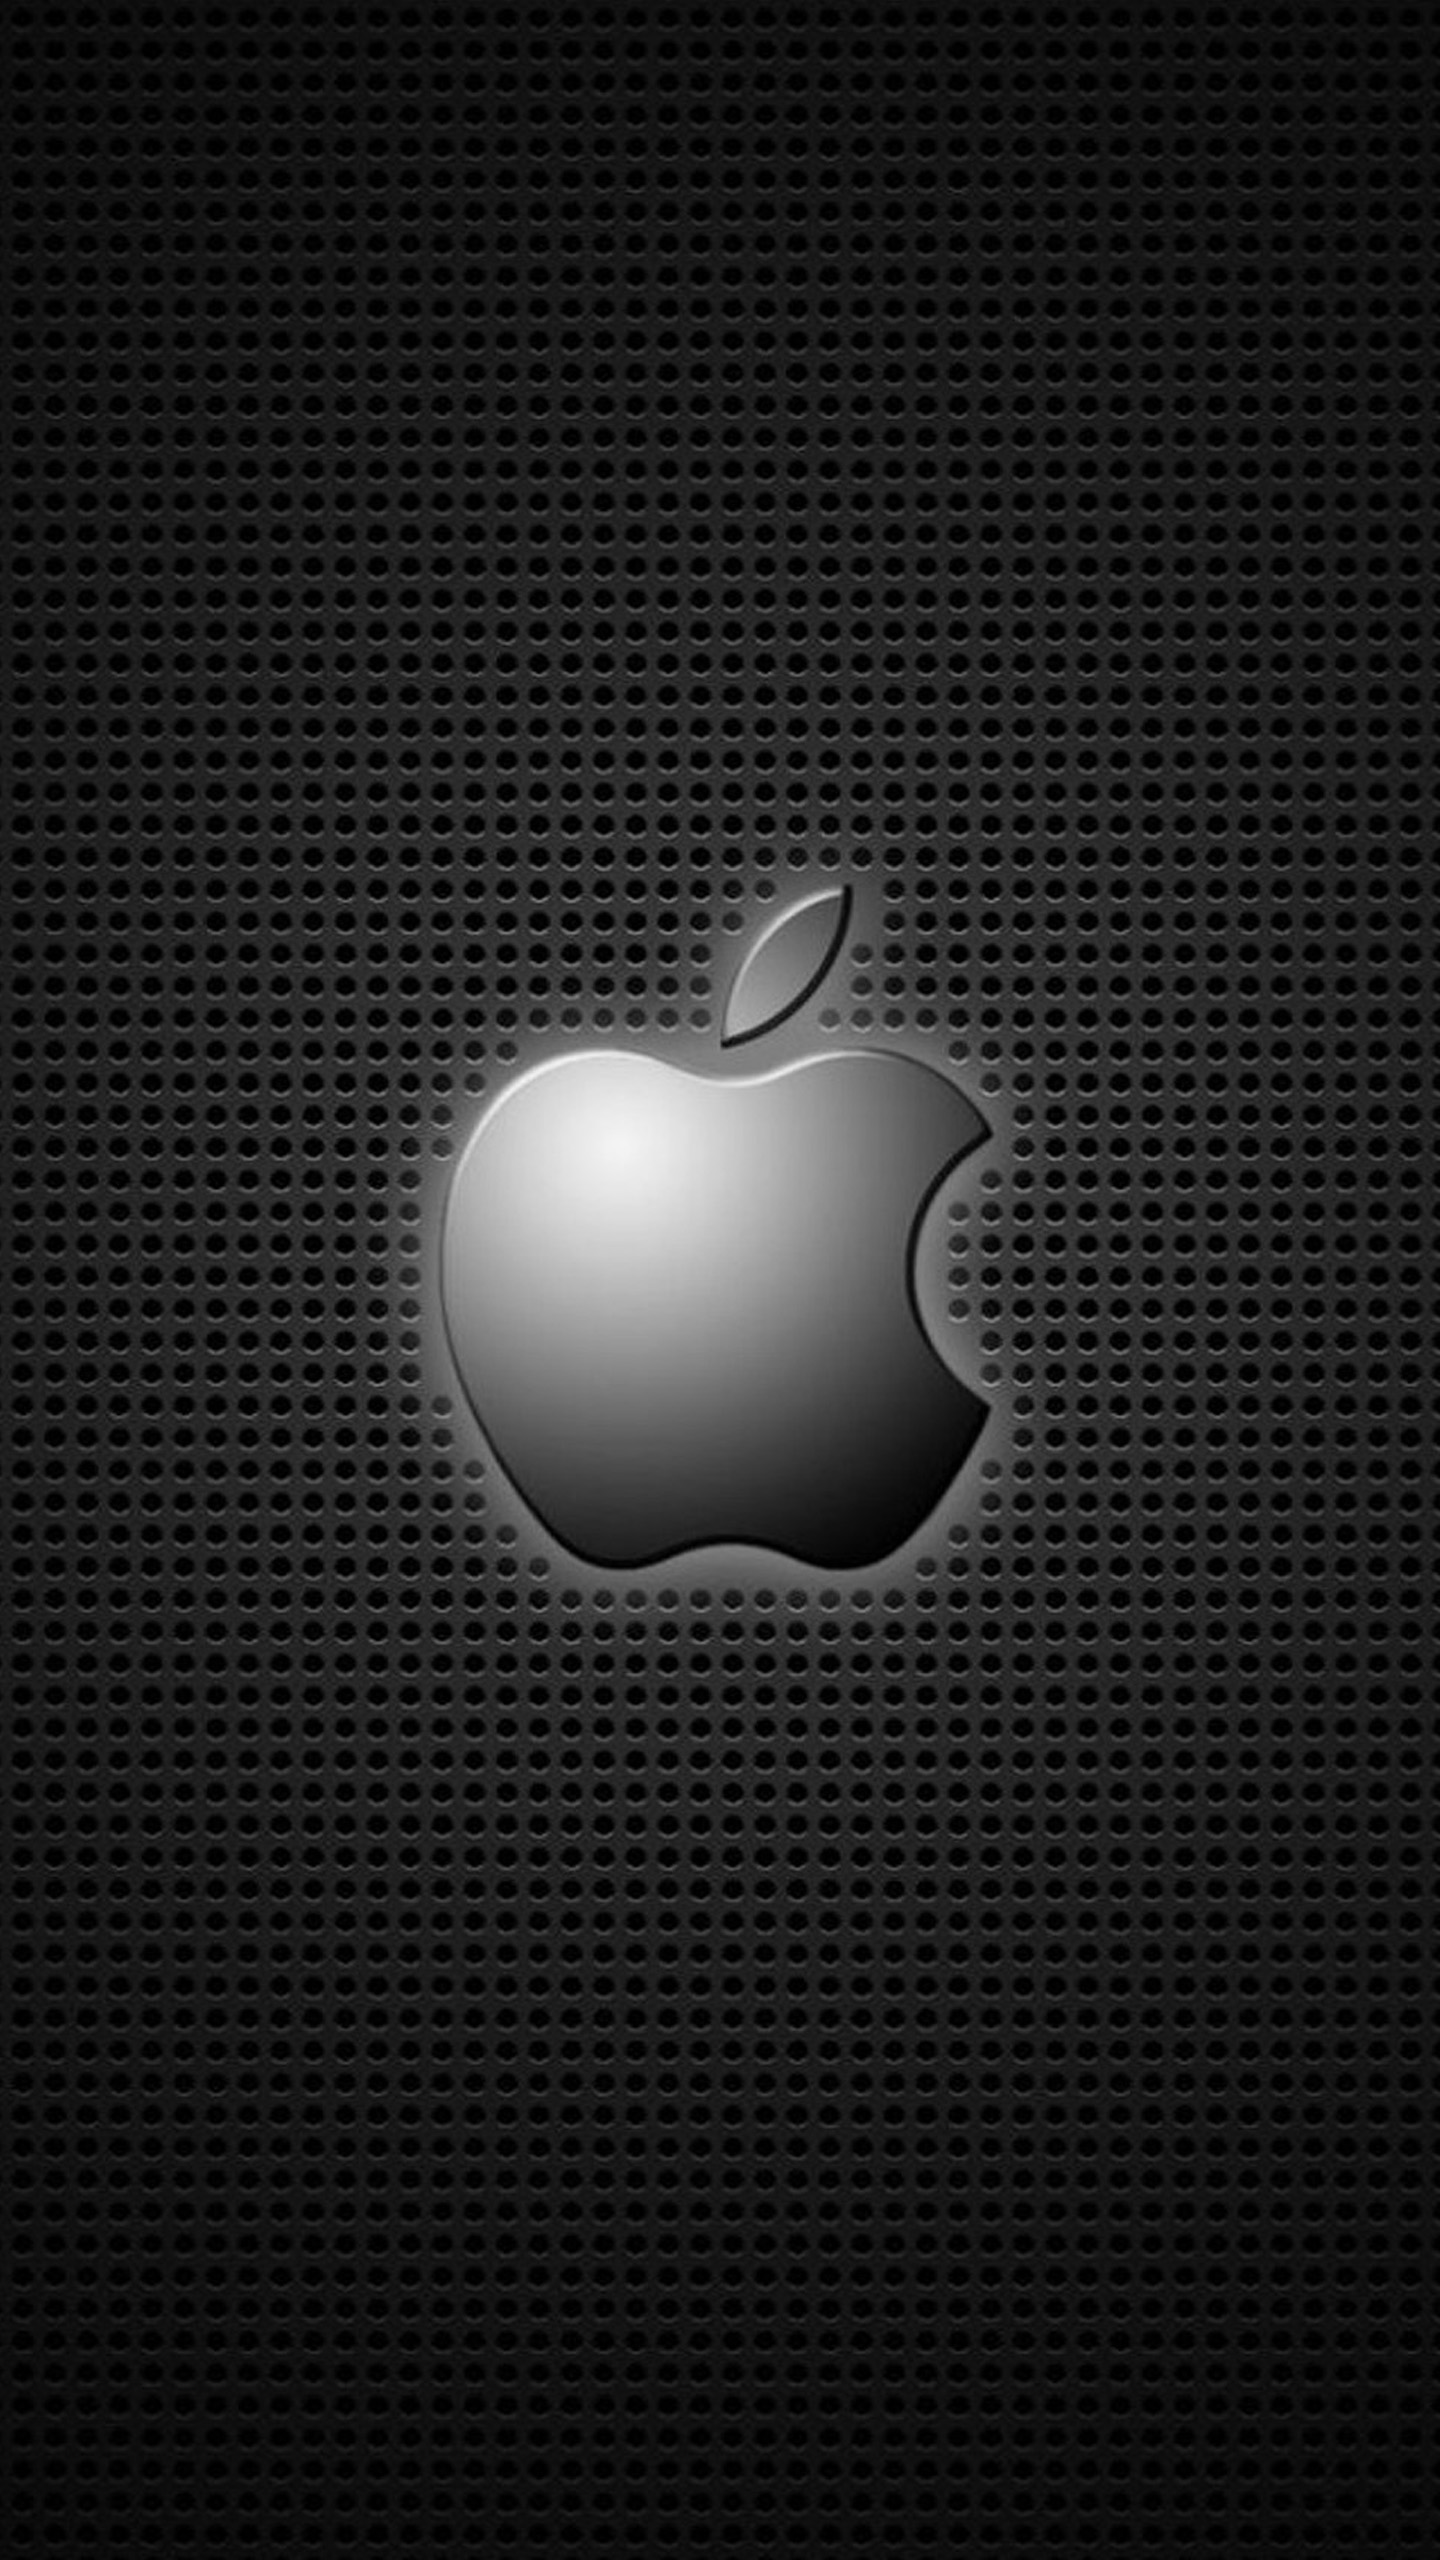 Black Apple logo 9 Galaxy S6 Wallpaper | Galaxy S6 Wallpapers